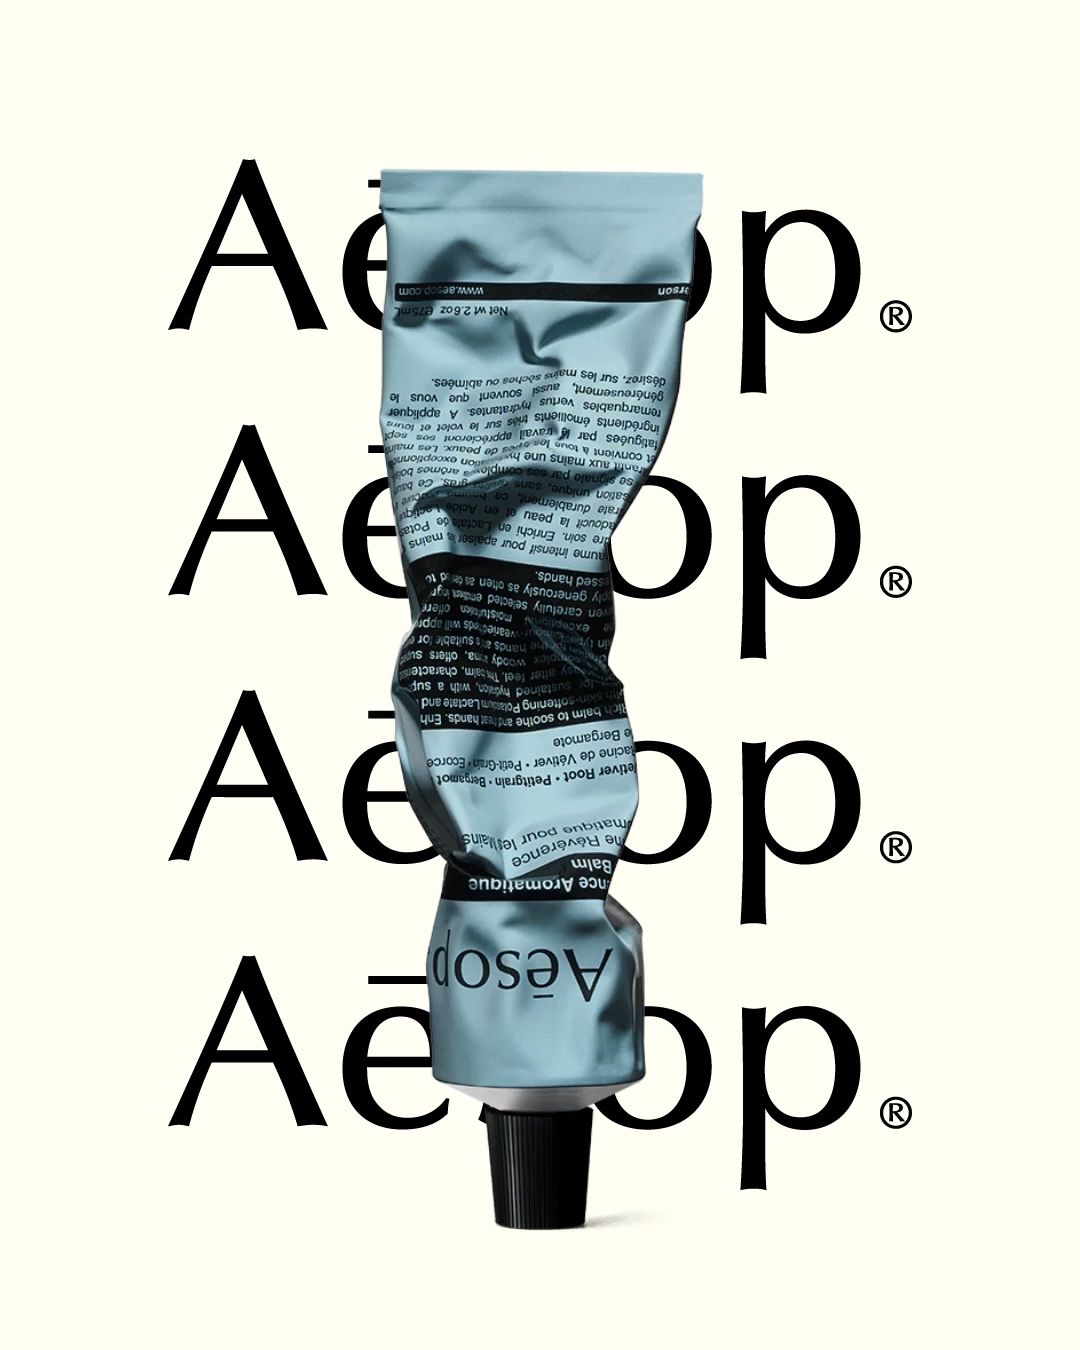 Aesop — Essence holistique - Motion design